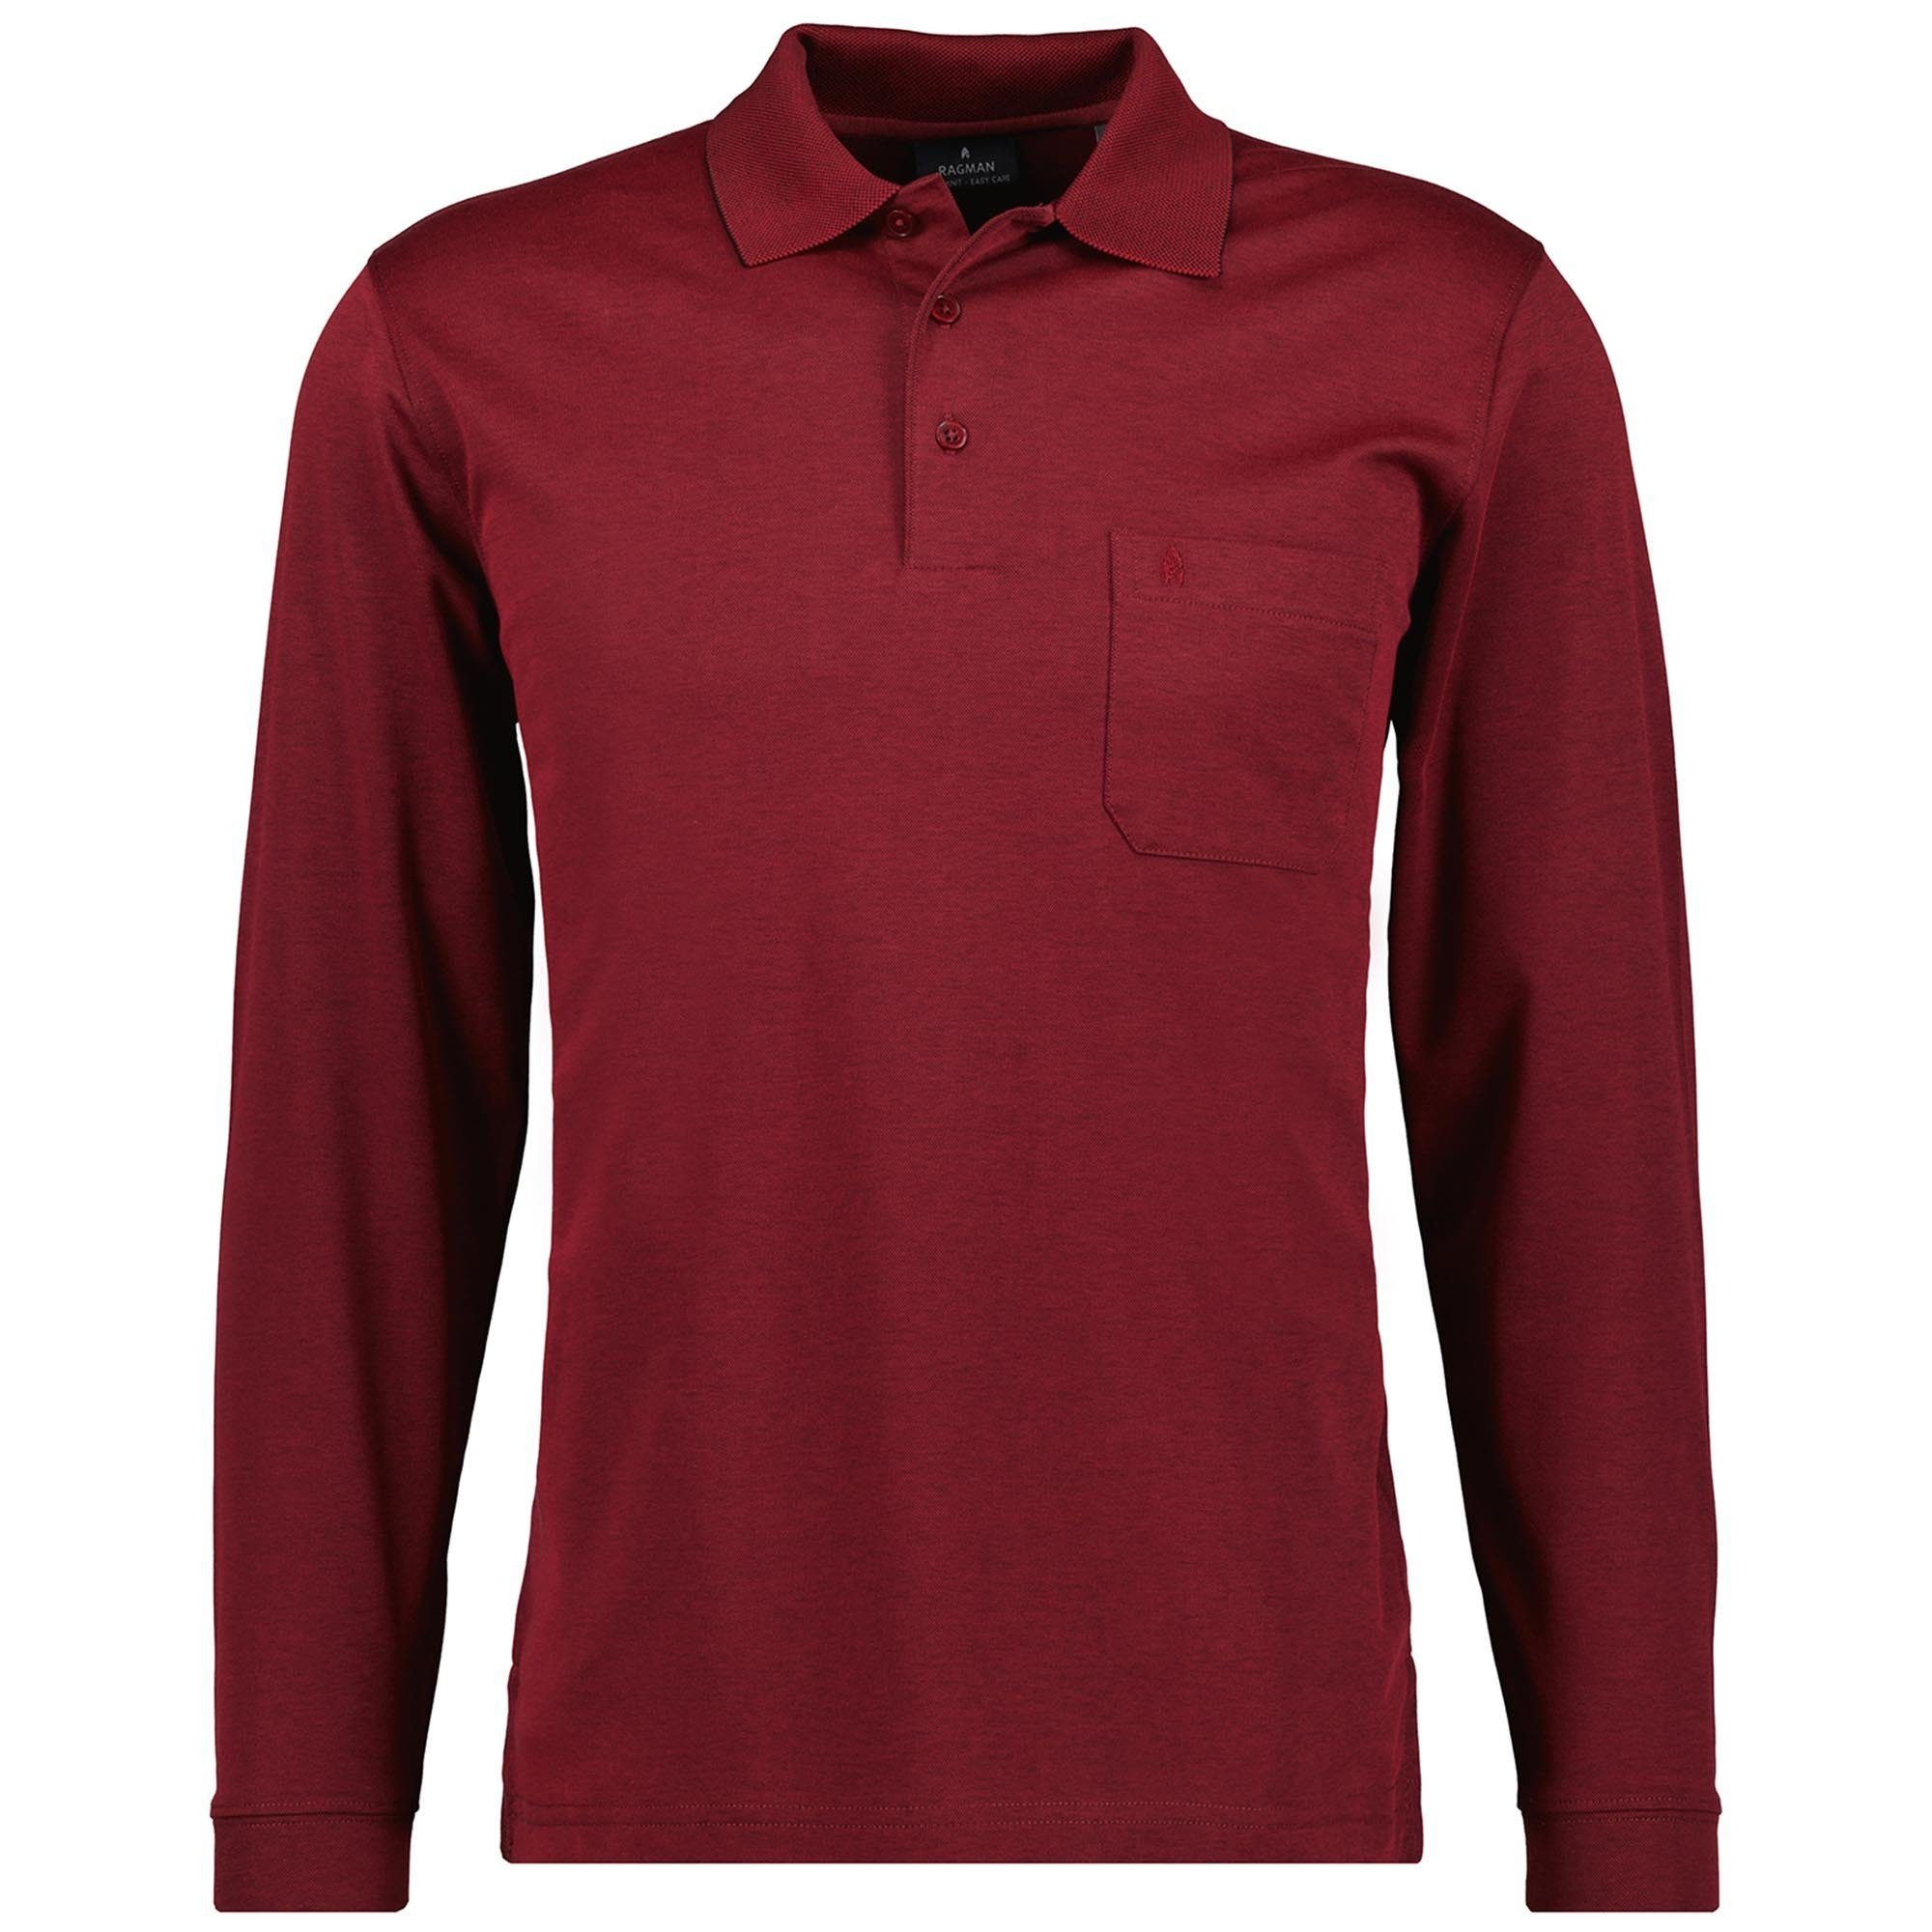 RAGMAN Poloshirt Herren Langarm-Poloshirt Knit Knopf Rot - Polo Soft